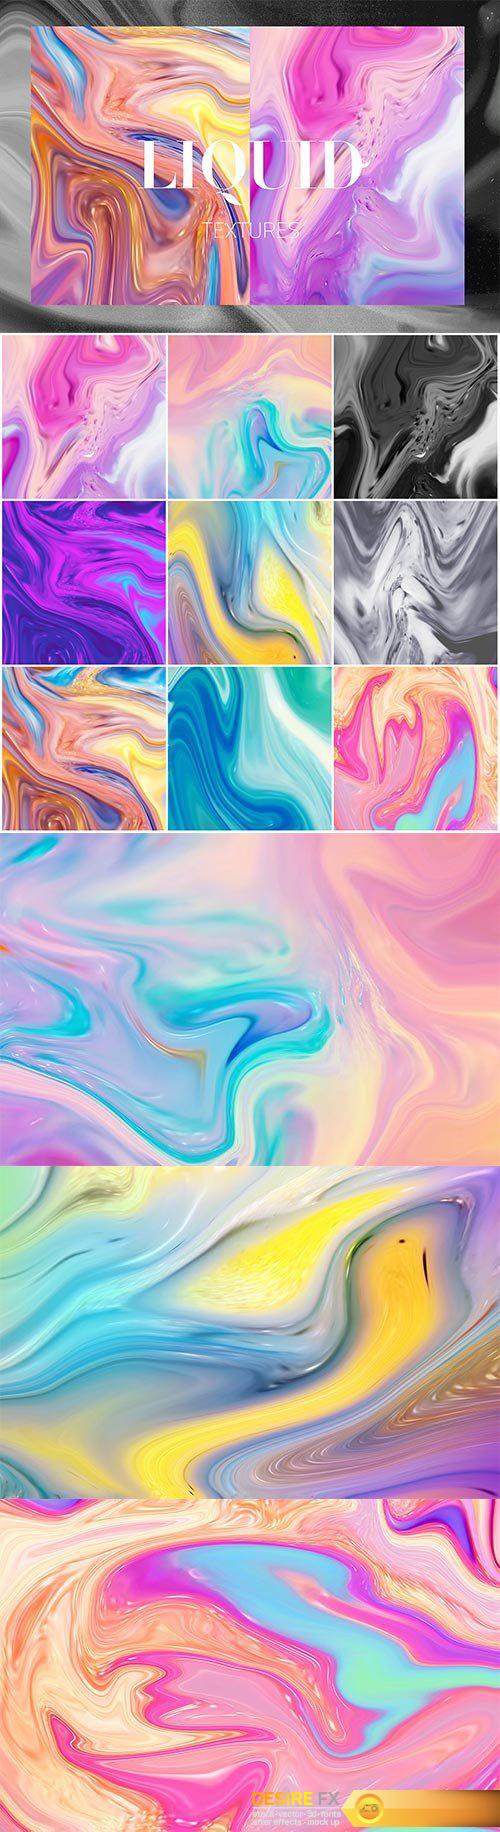 13 Liquid Textures